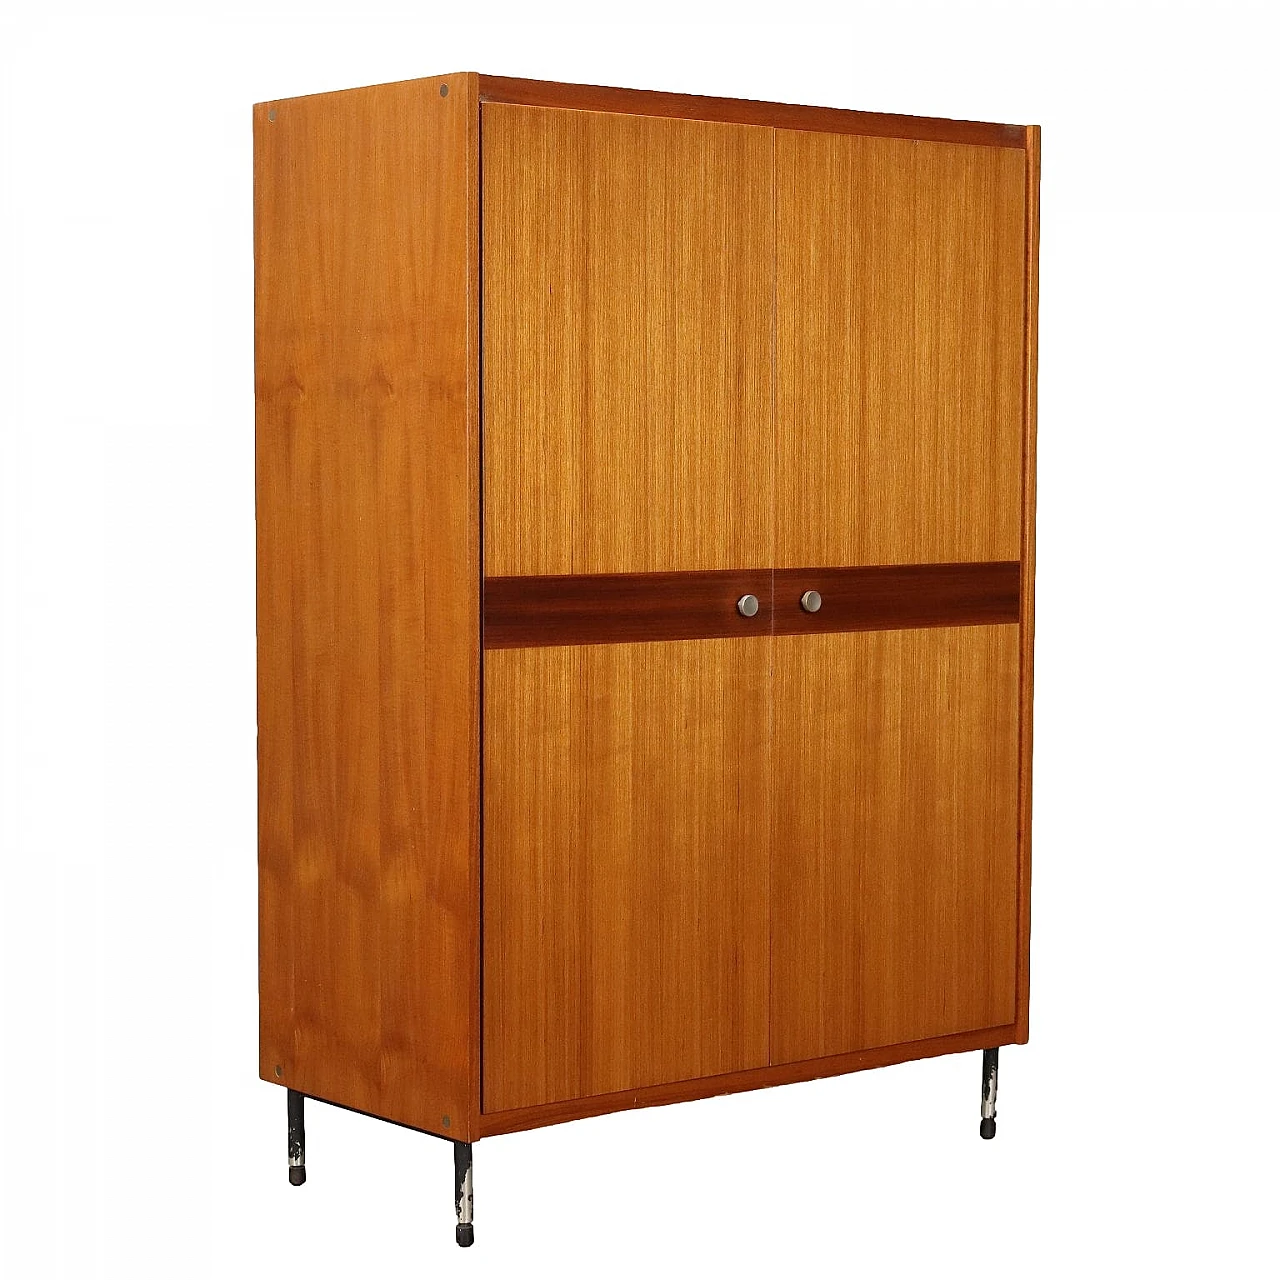 Two-door teak and mahogany wardrobe with metal legs, 1960s 1